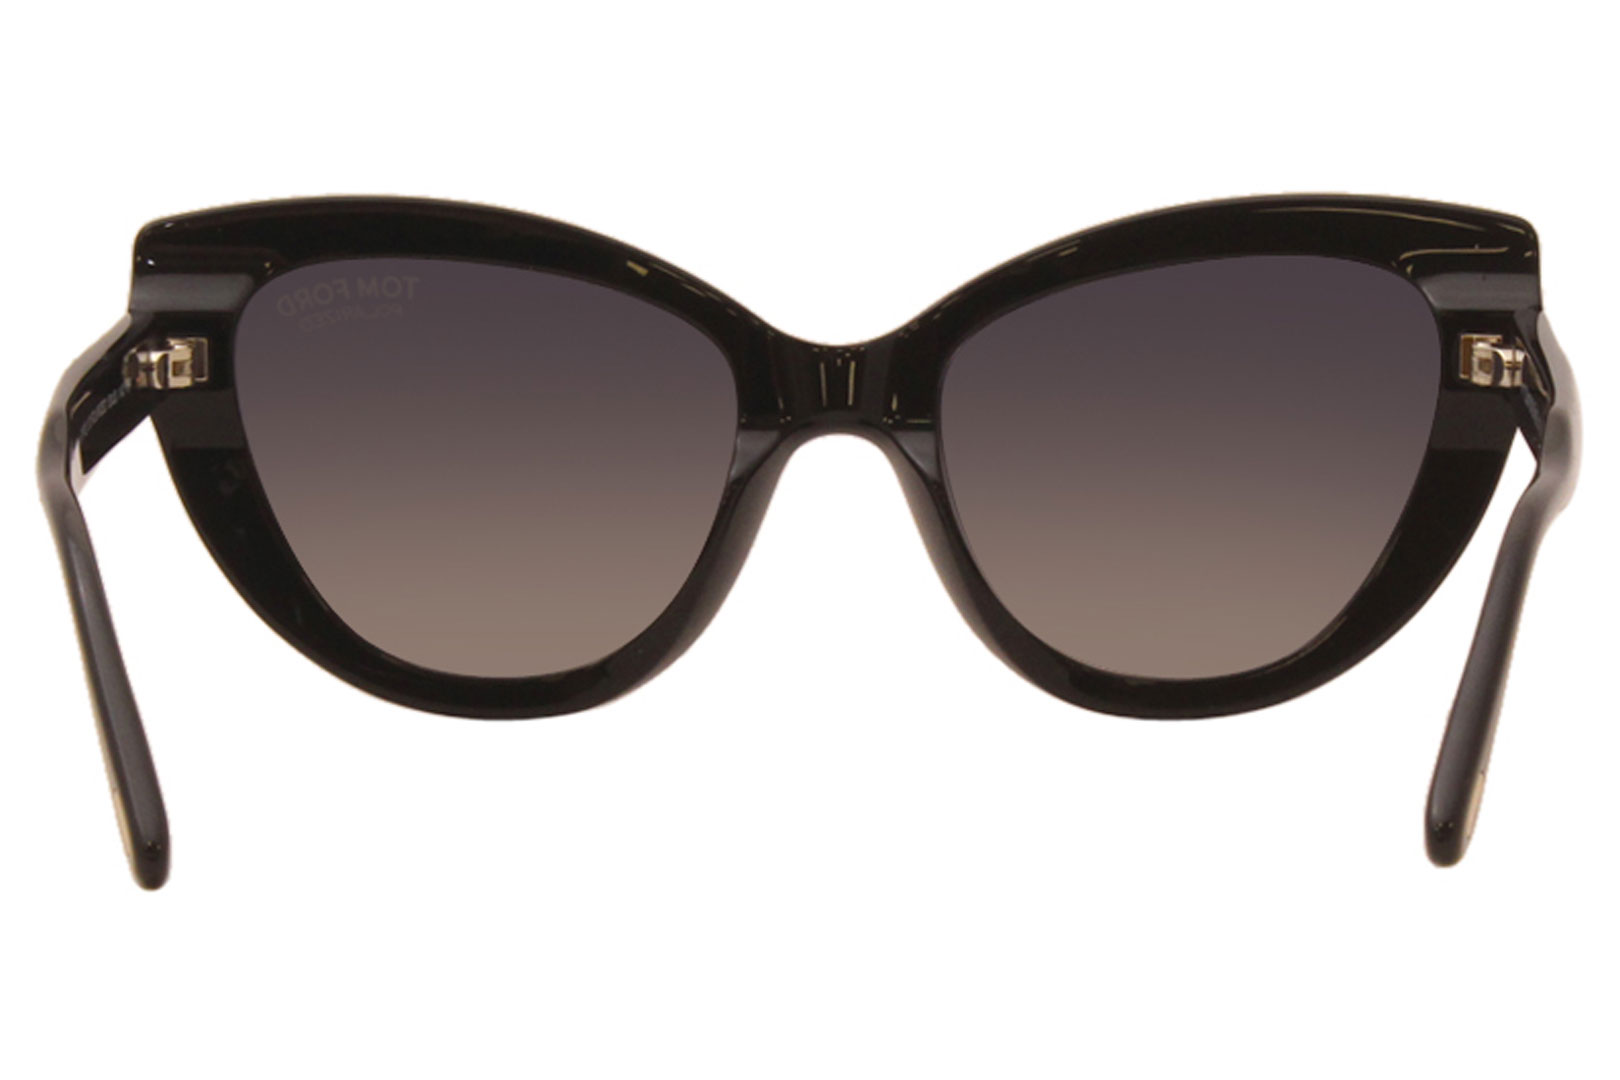 Tom Ford Sunglasses Women S Anya Tf762 01d Shiny Black Gold Smoke Polarized 55mm